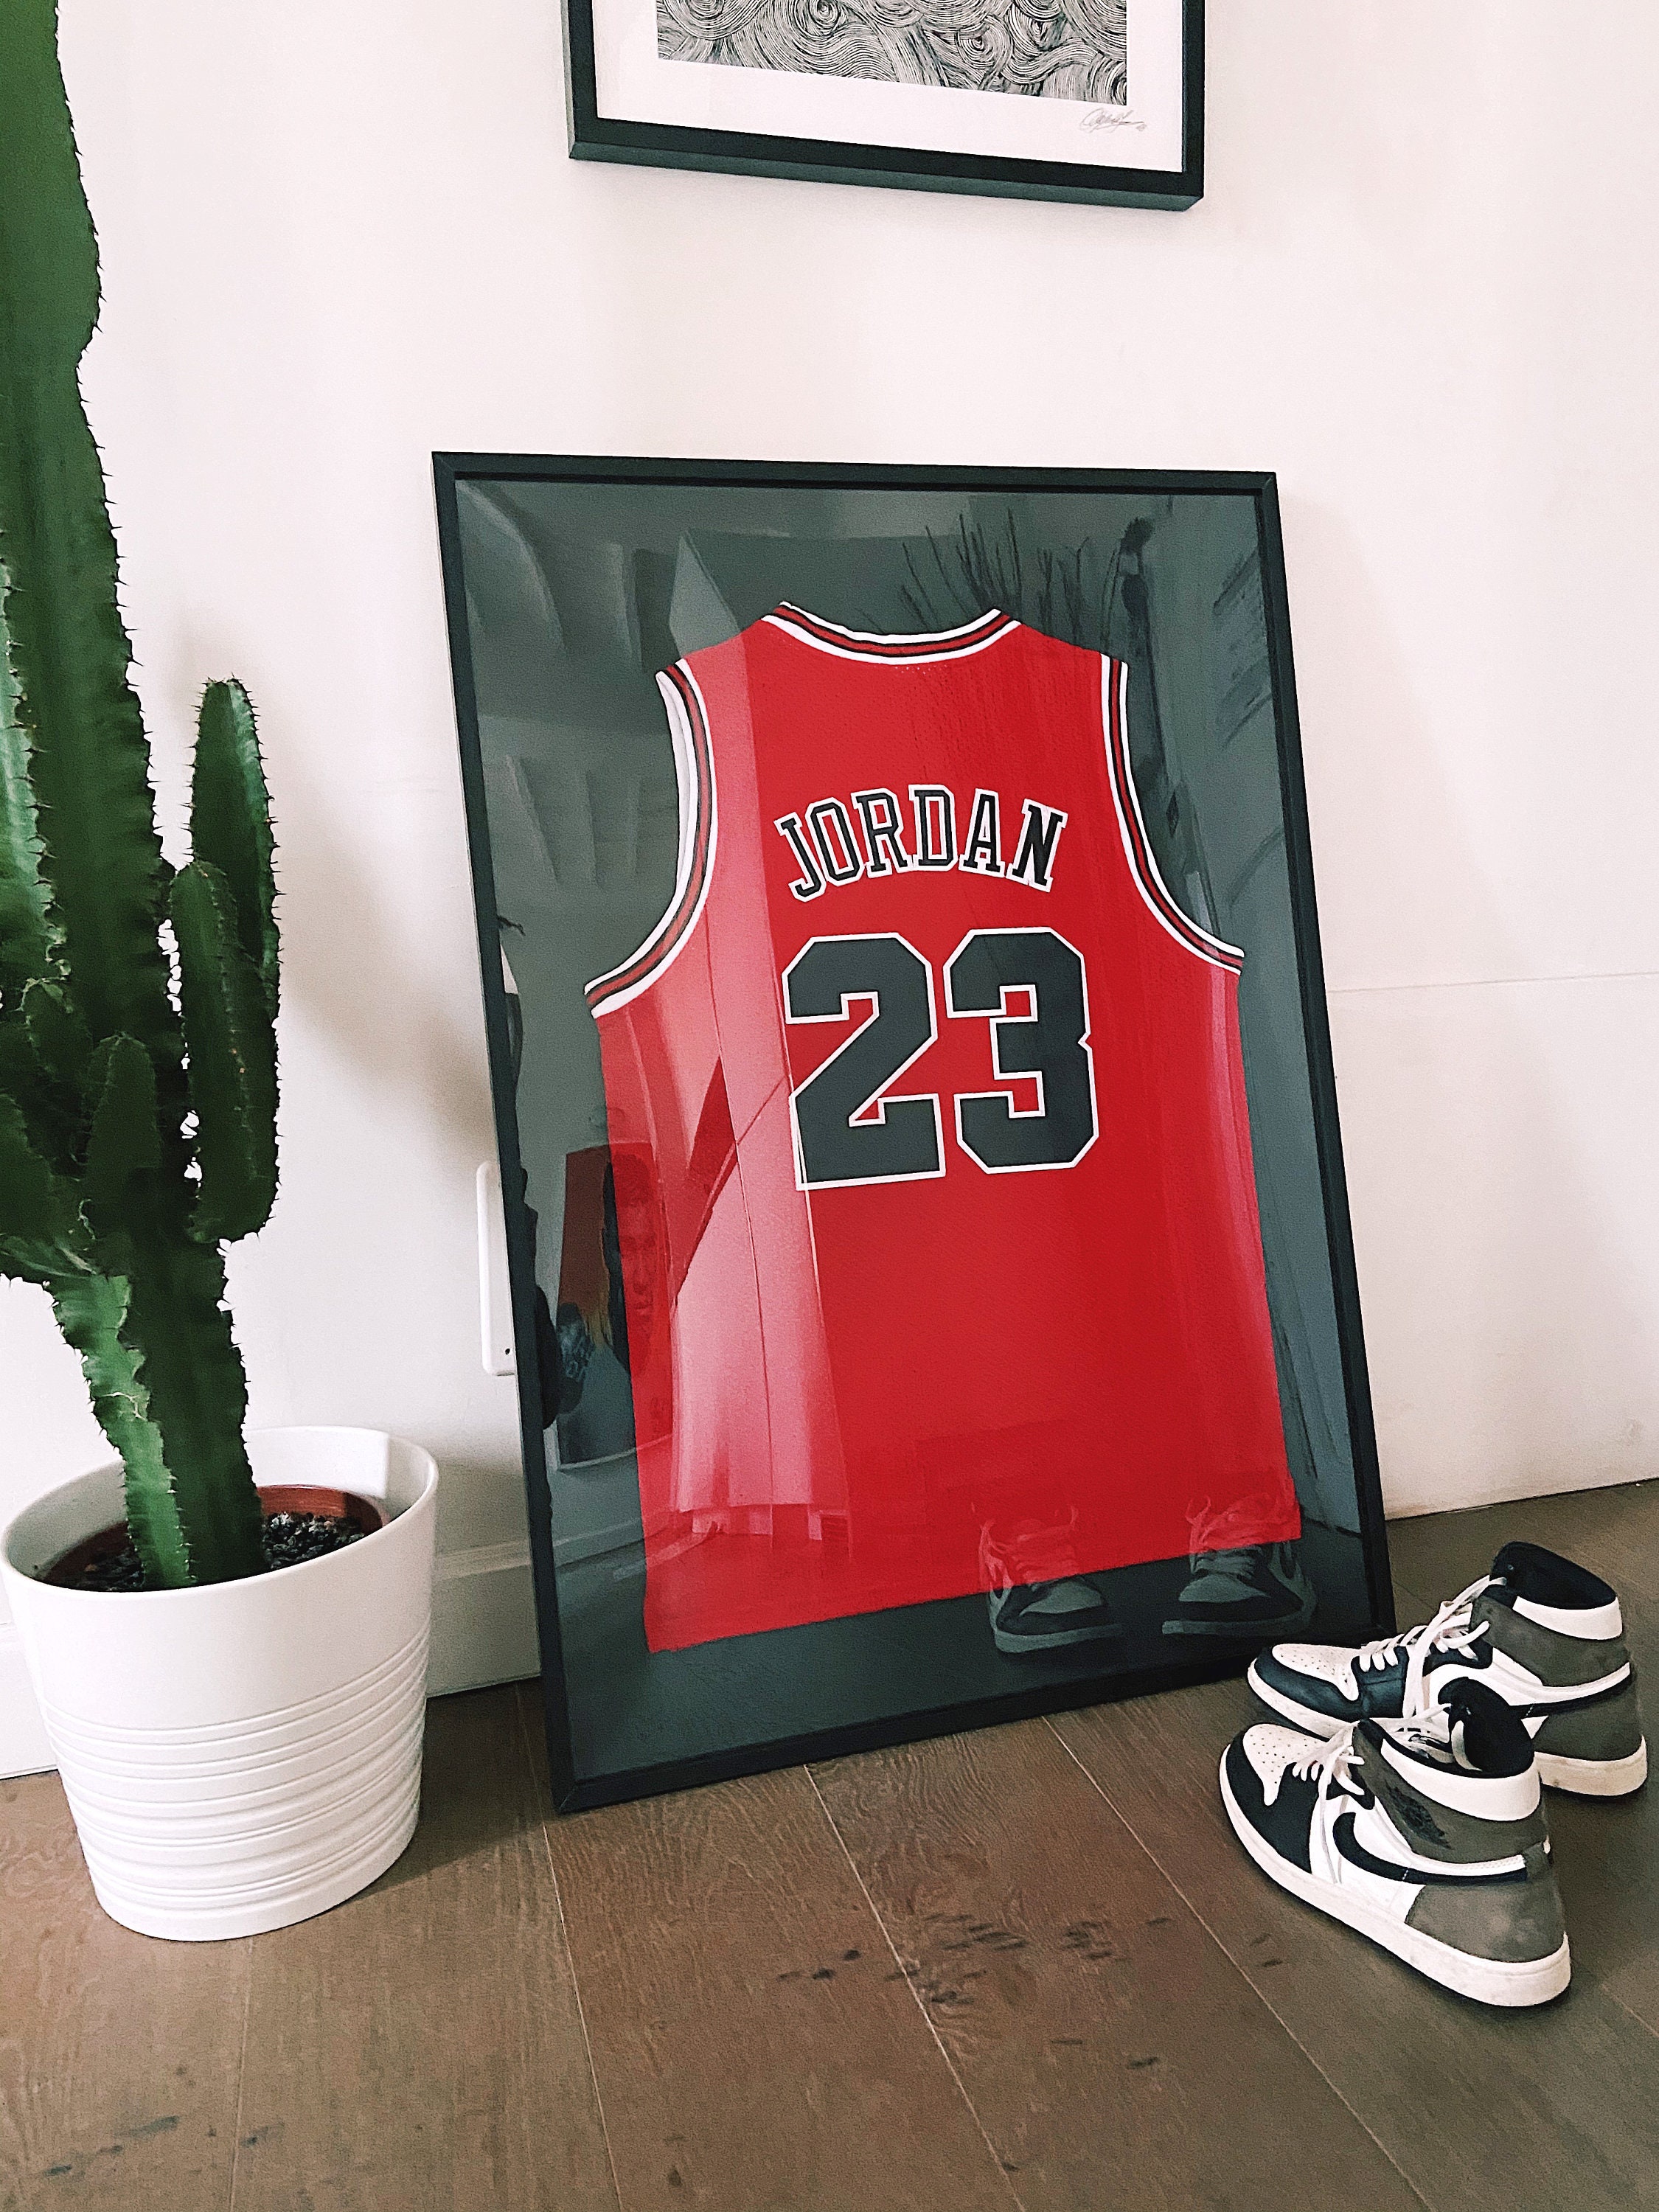 Michael Jordan Chicago Bulls Jersey Framed Art Print by SAYIDOWjpg